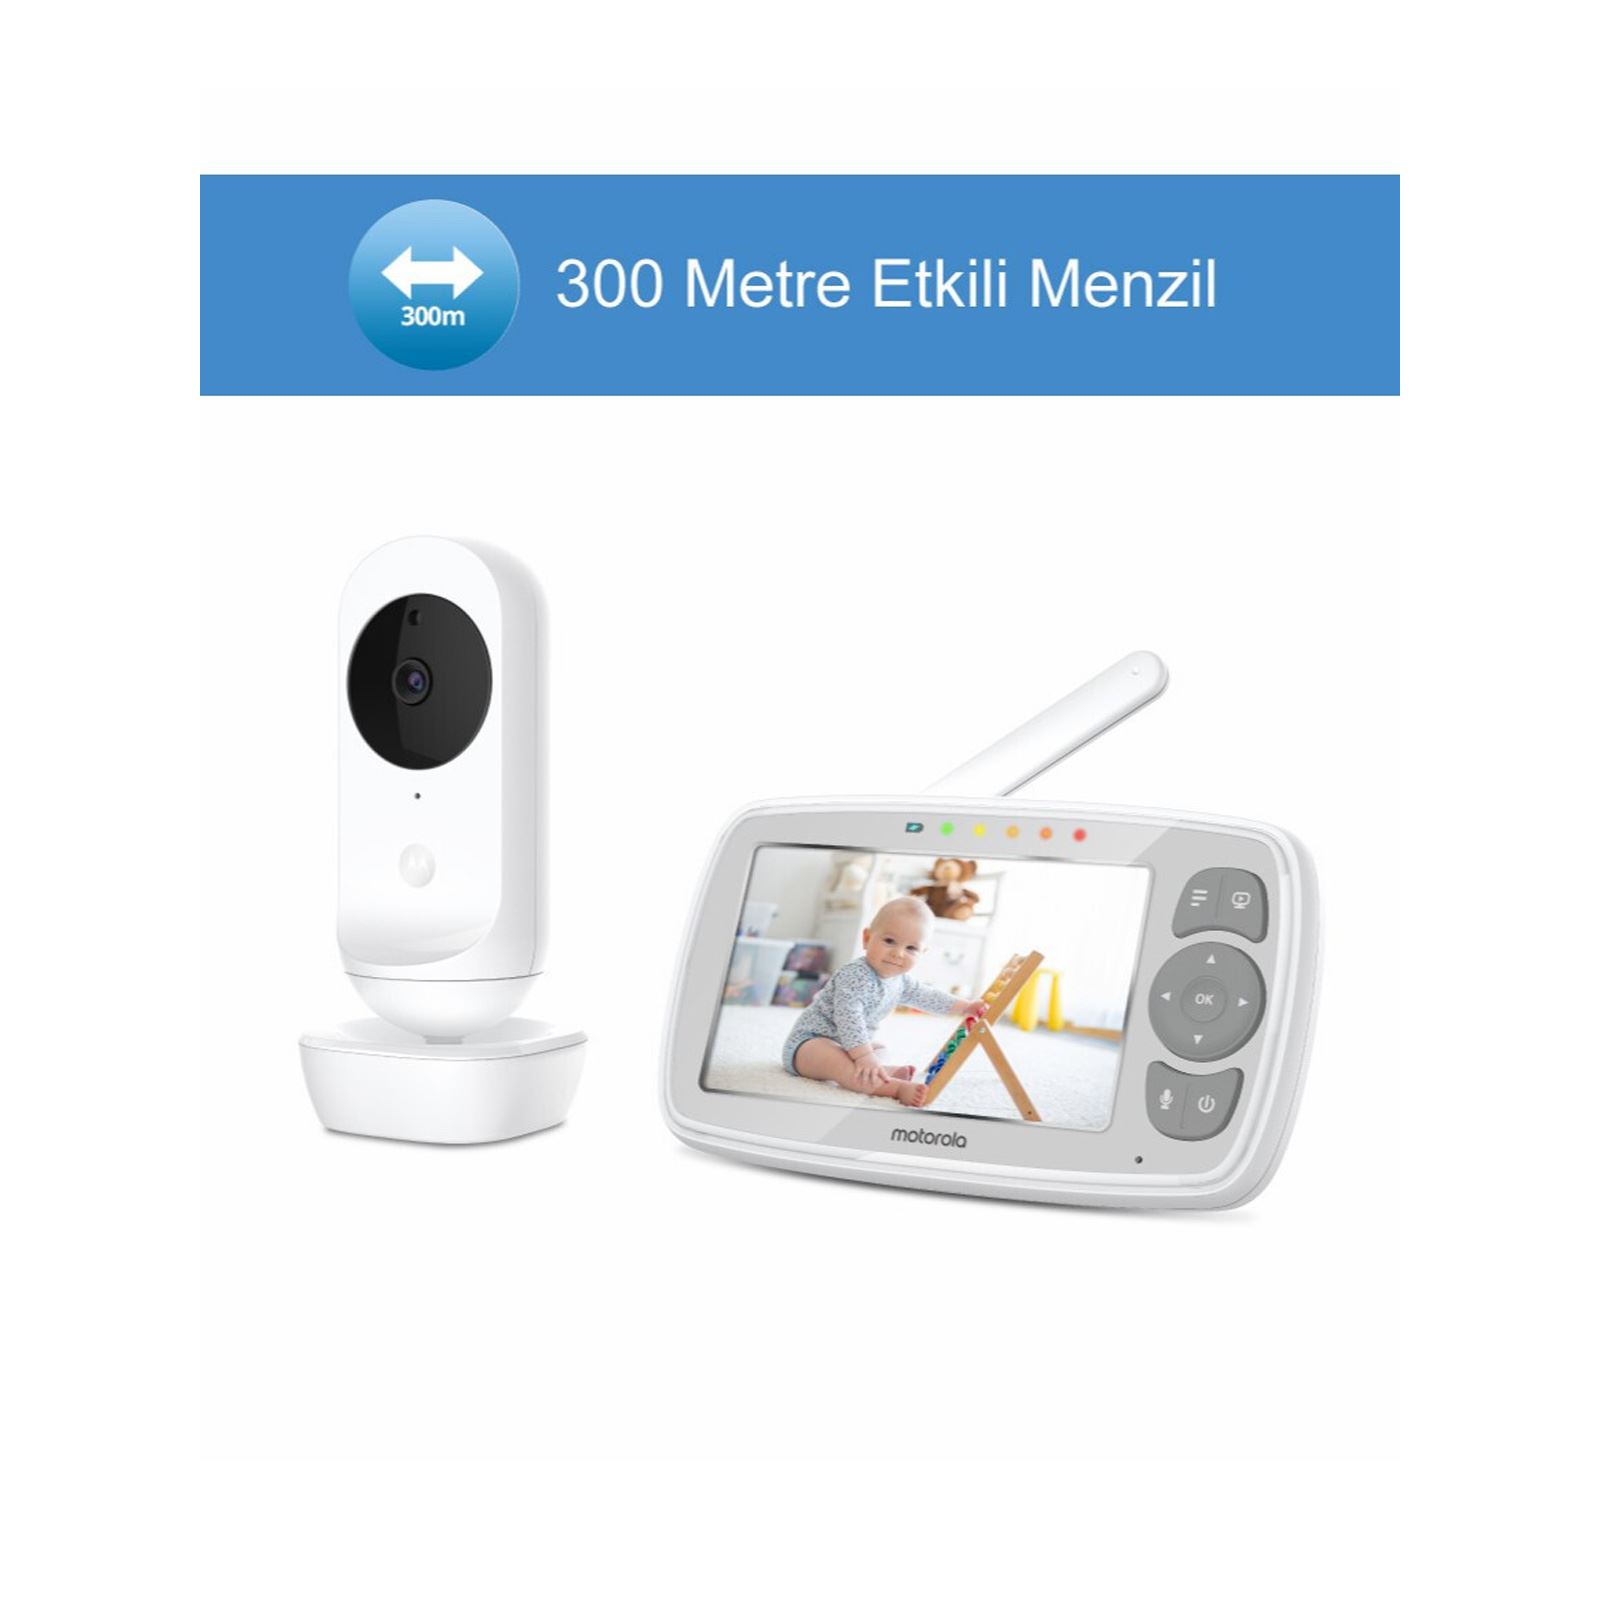 Motorola Dijital Bebek Kamera - 4.3 inç LCD Ekran (EASE34)